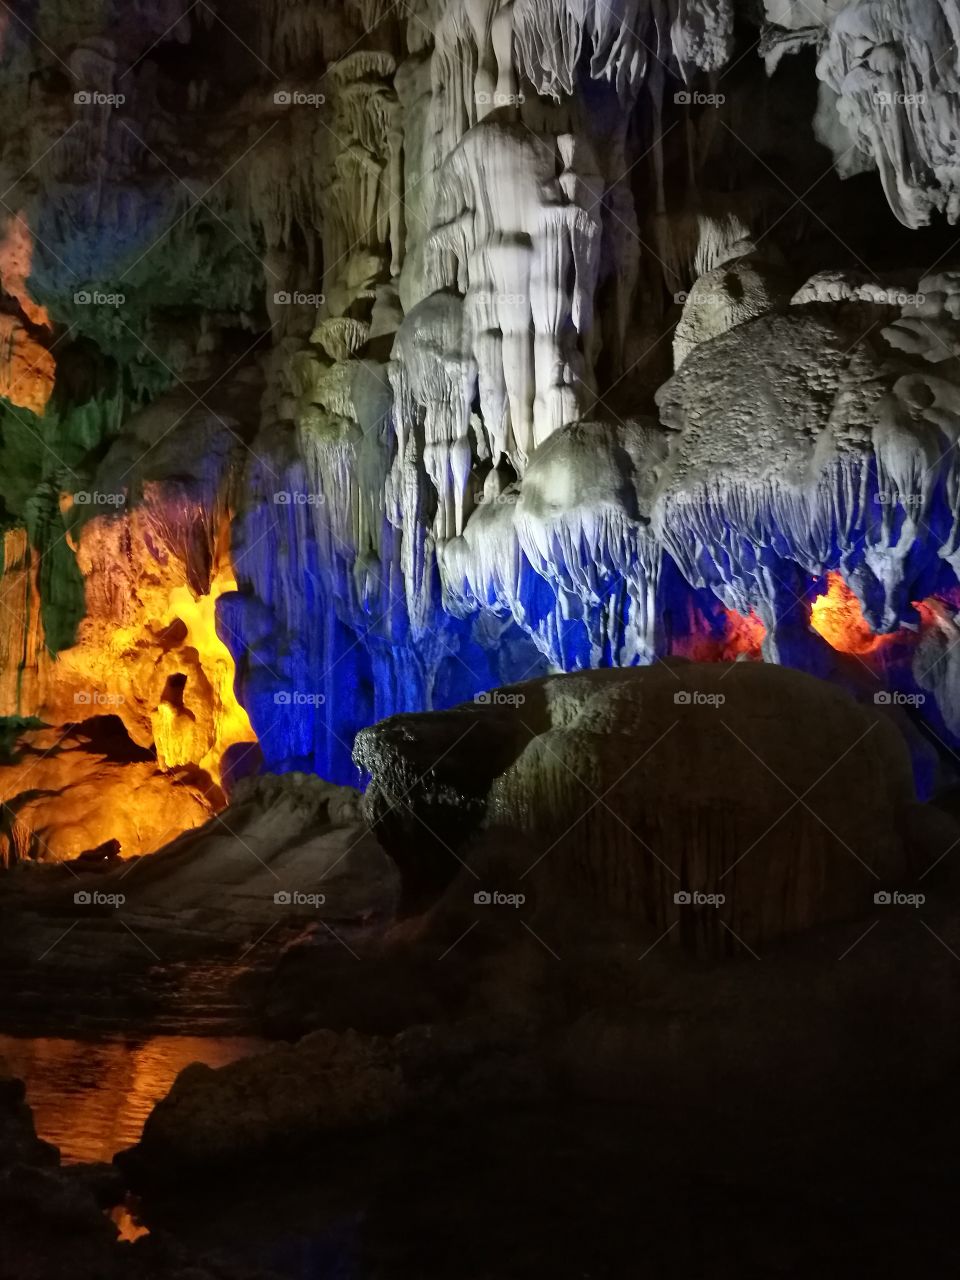 Son Doong Cave, Vietnam - fabulous artistic lights